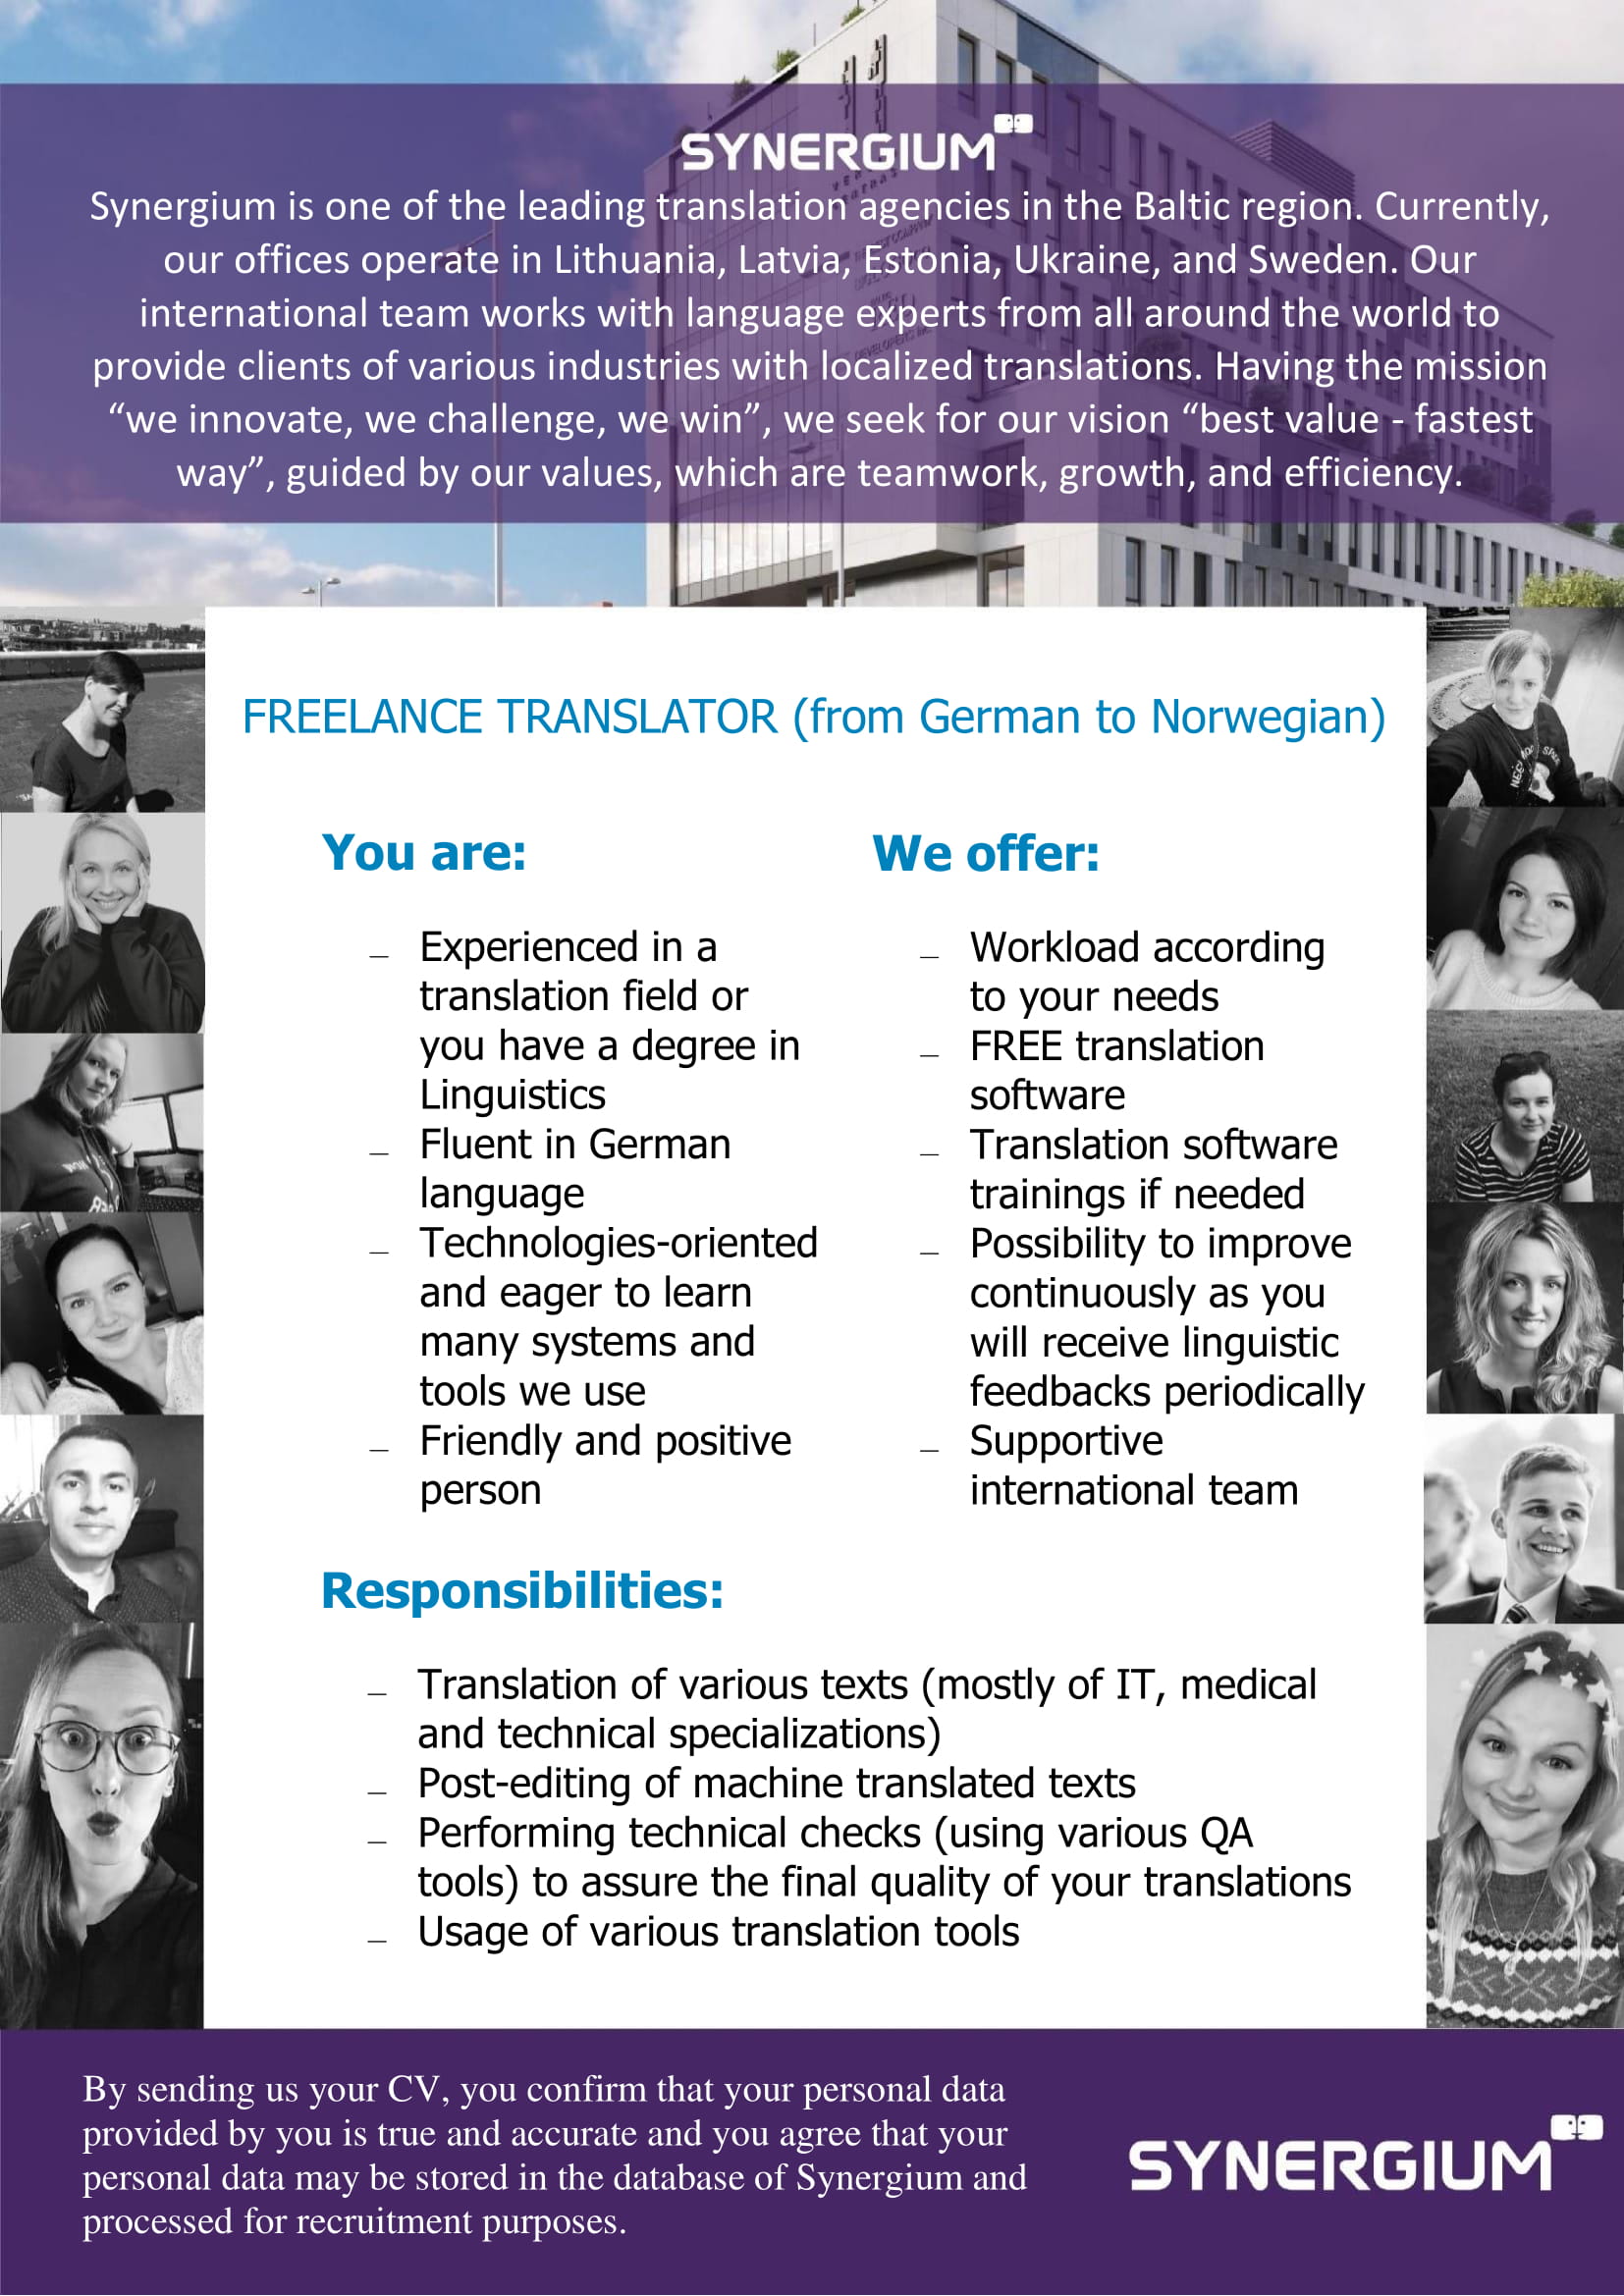  freelance translator from german to norwegian job advertisement synergium